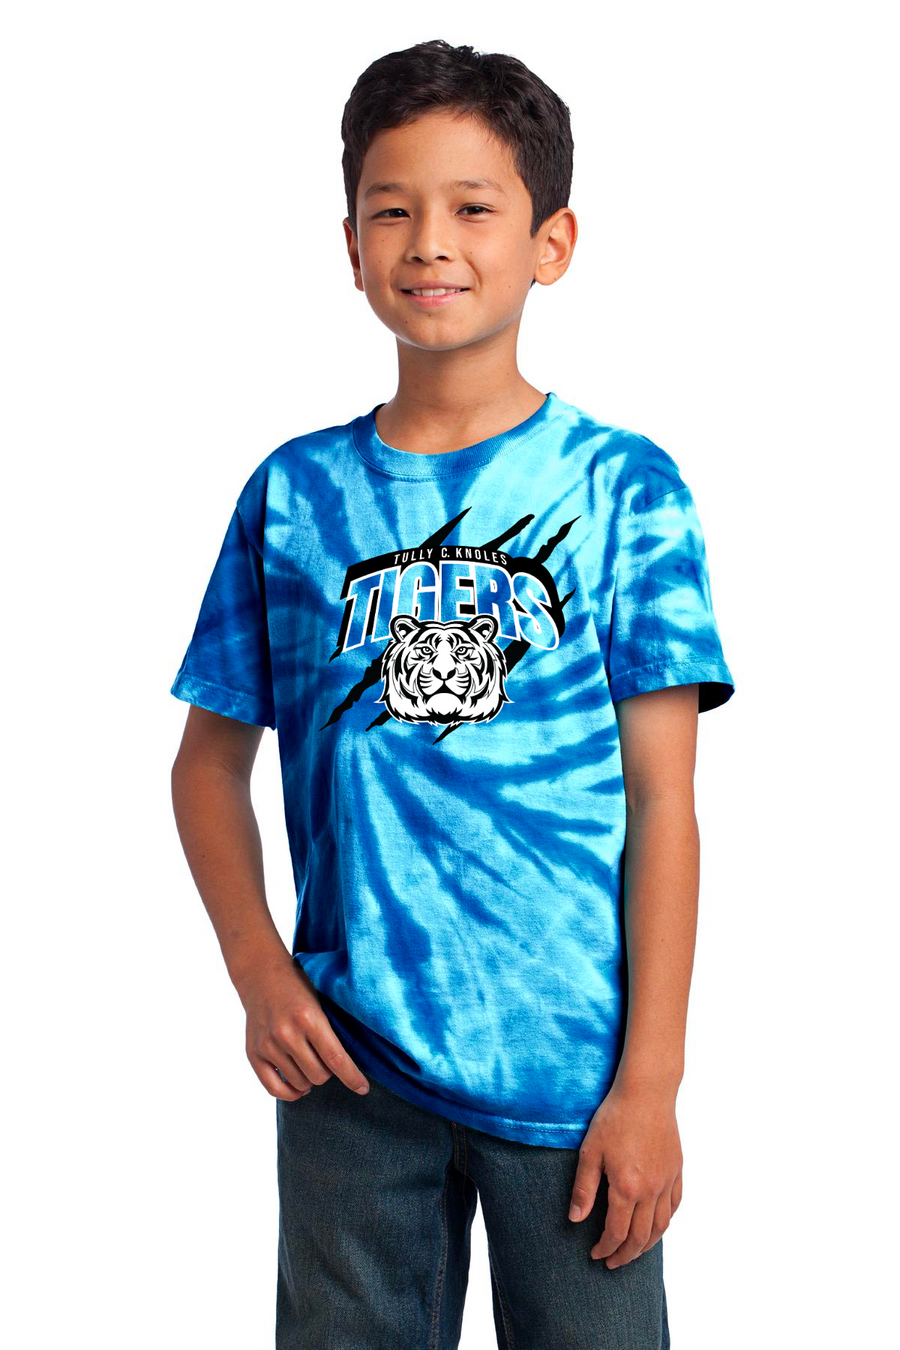 Tully C Knoles - Spirit Wear 23/24 On-Demand-Unisex Tie-Dye Shirt Tiger Logo